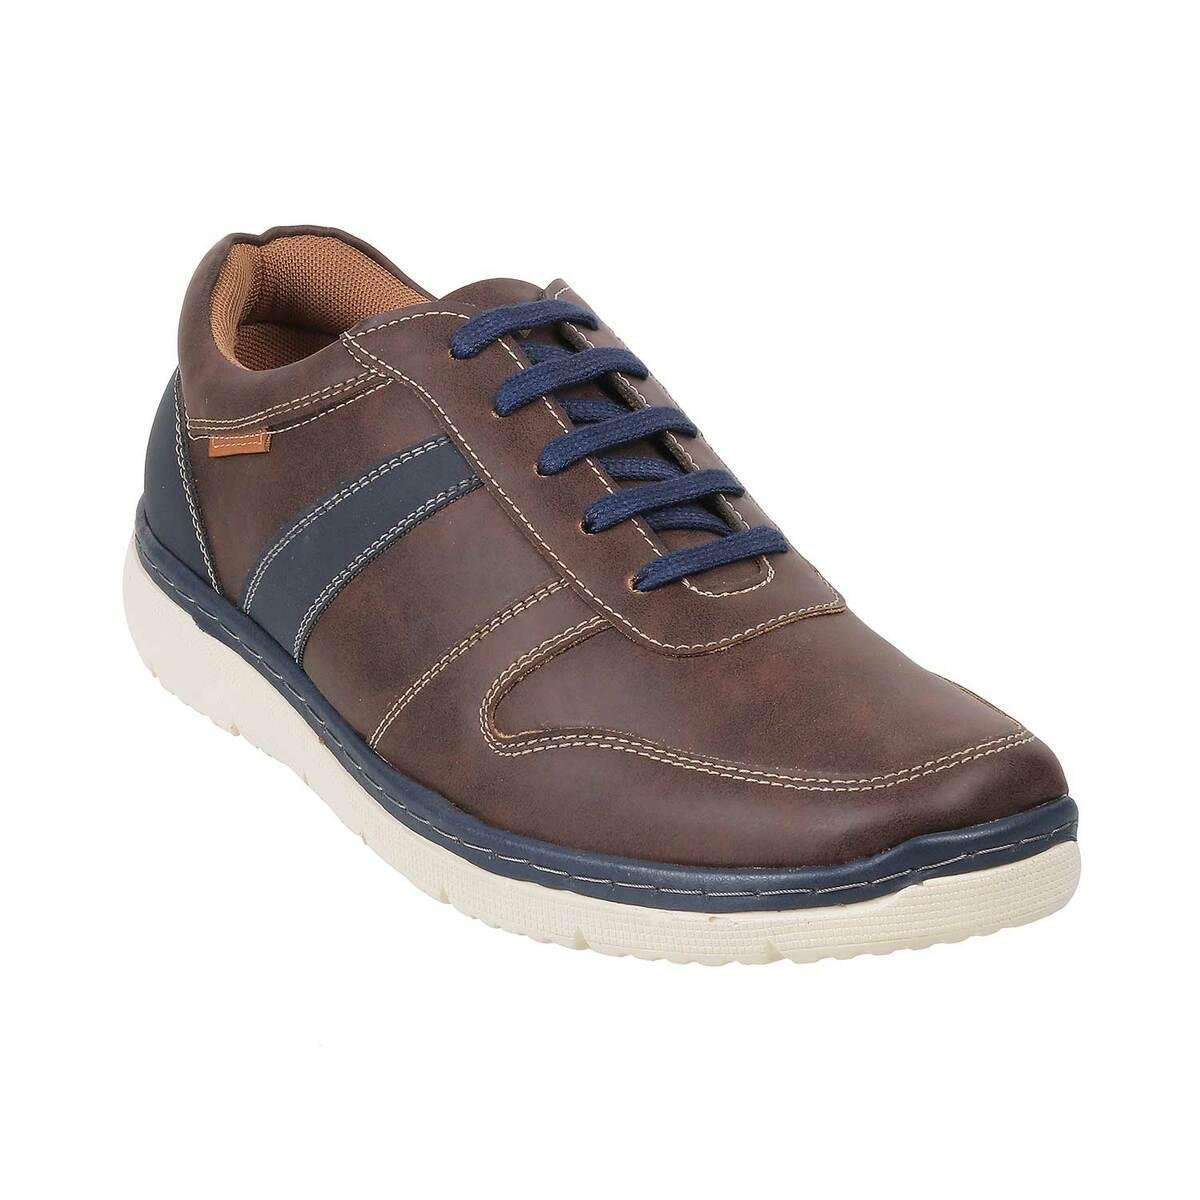 Buy Men Tan Casual Sneakers Online | SKU: 71-8535-23-40-Metro Shoes